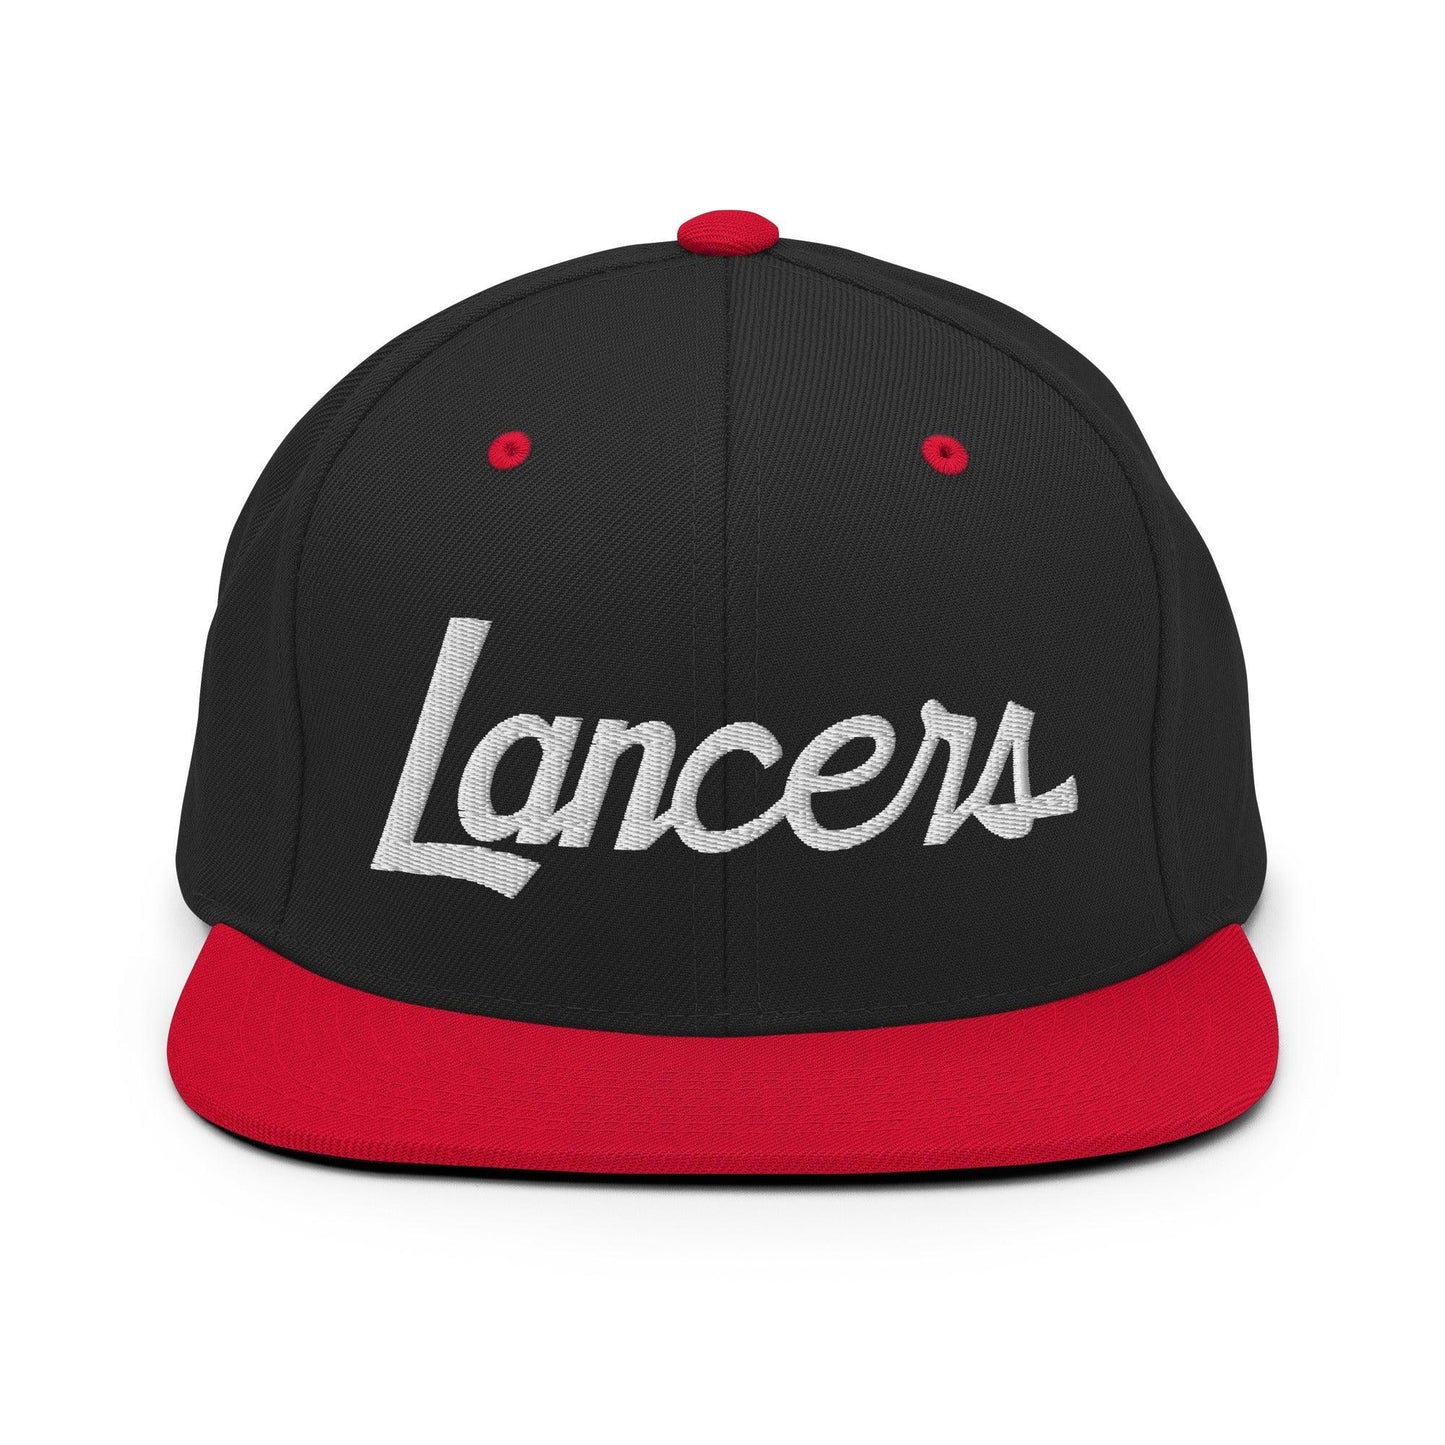 Lancers School Mascot Script Snapback Hat Black Red